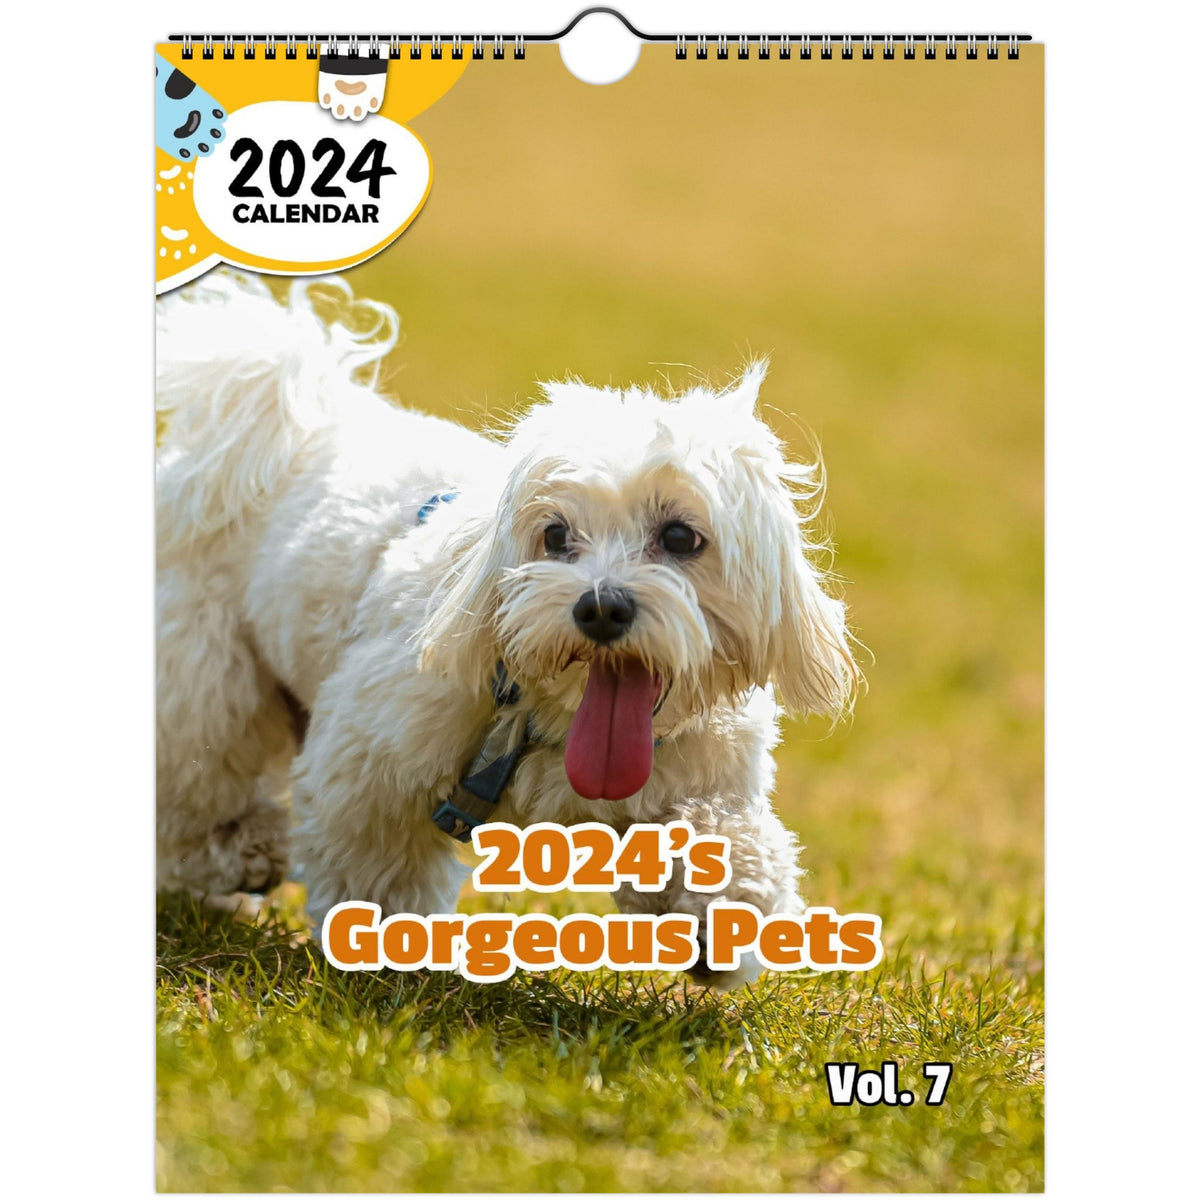 2024's Pets Volume Seven 2024 Wall Calendar (Published